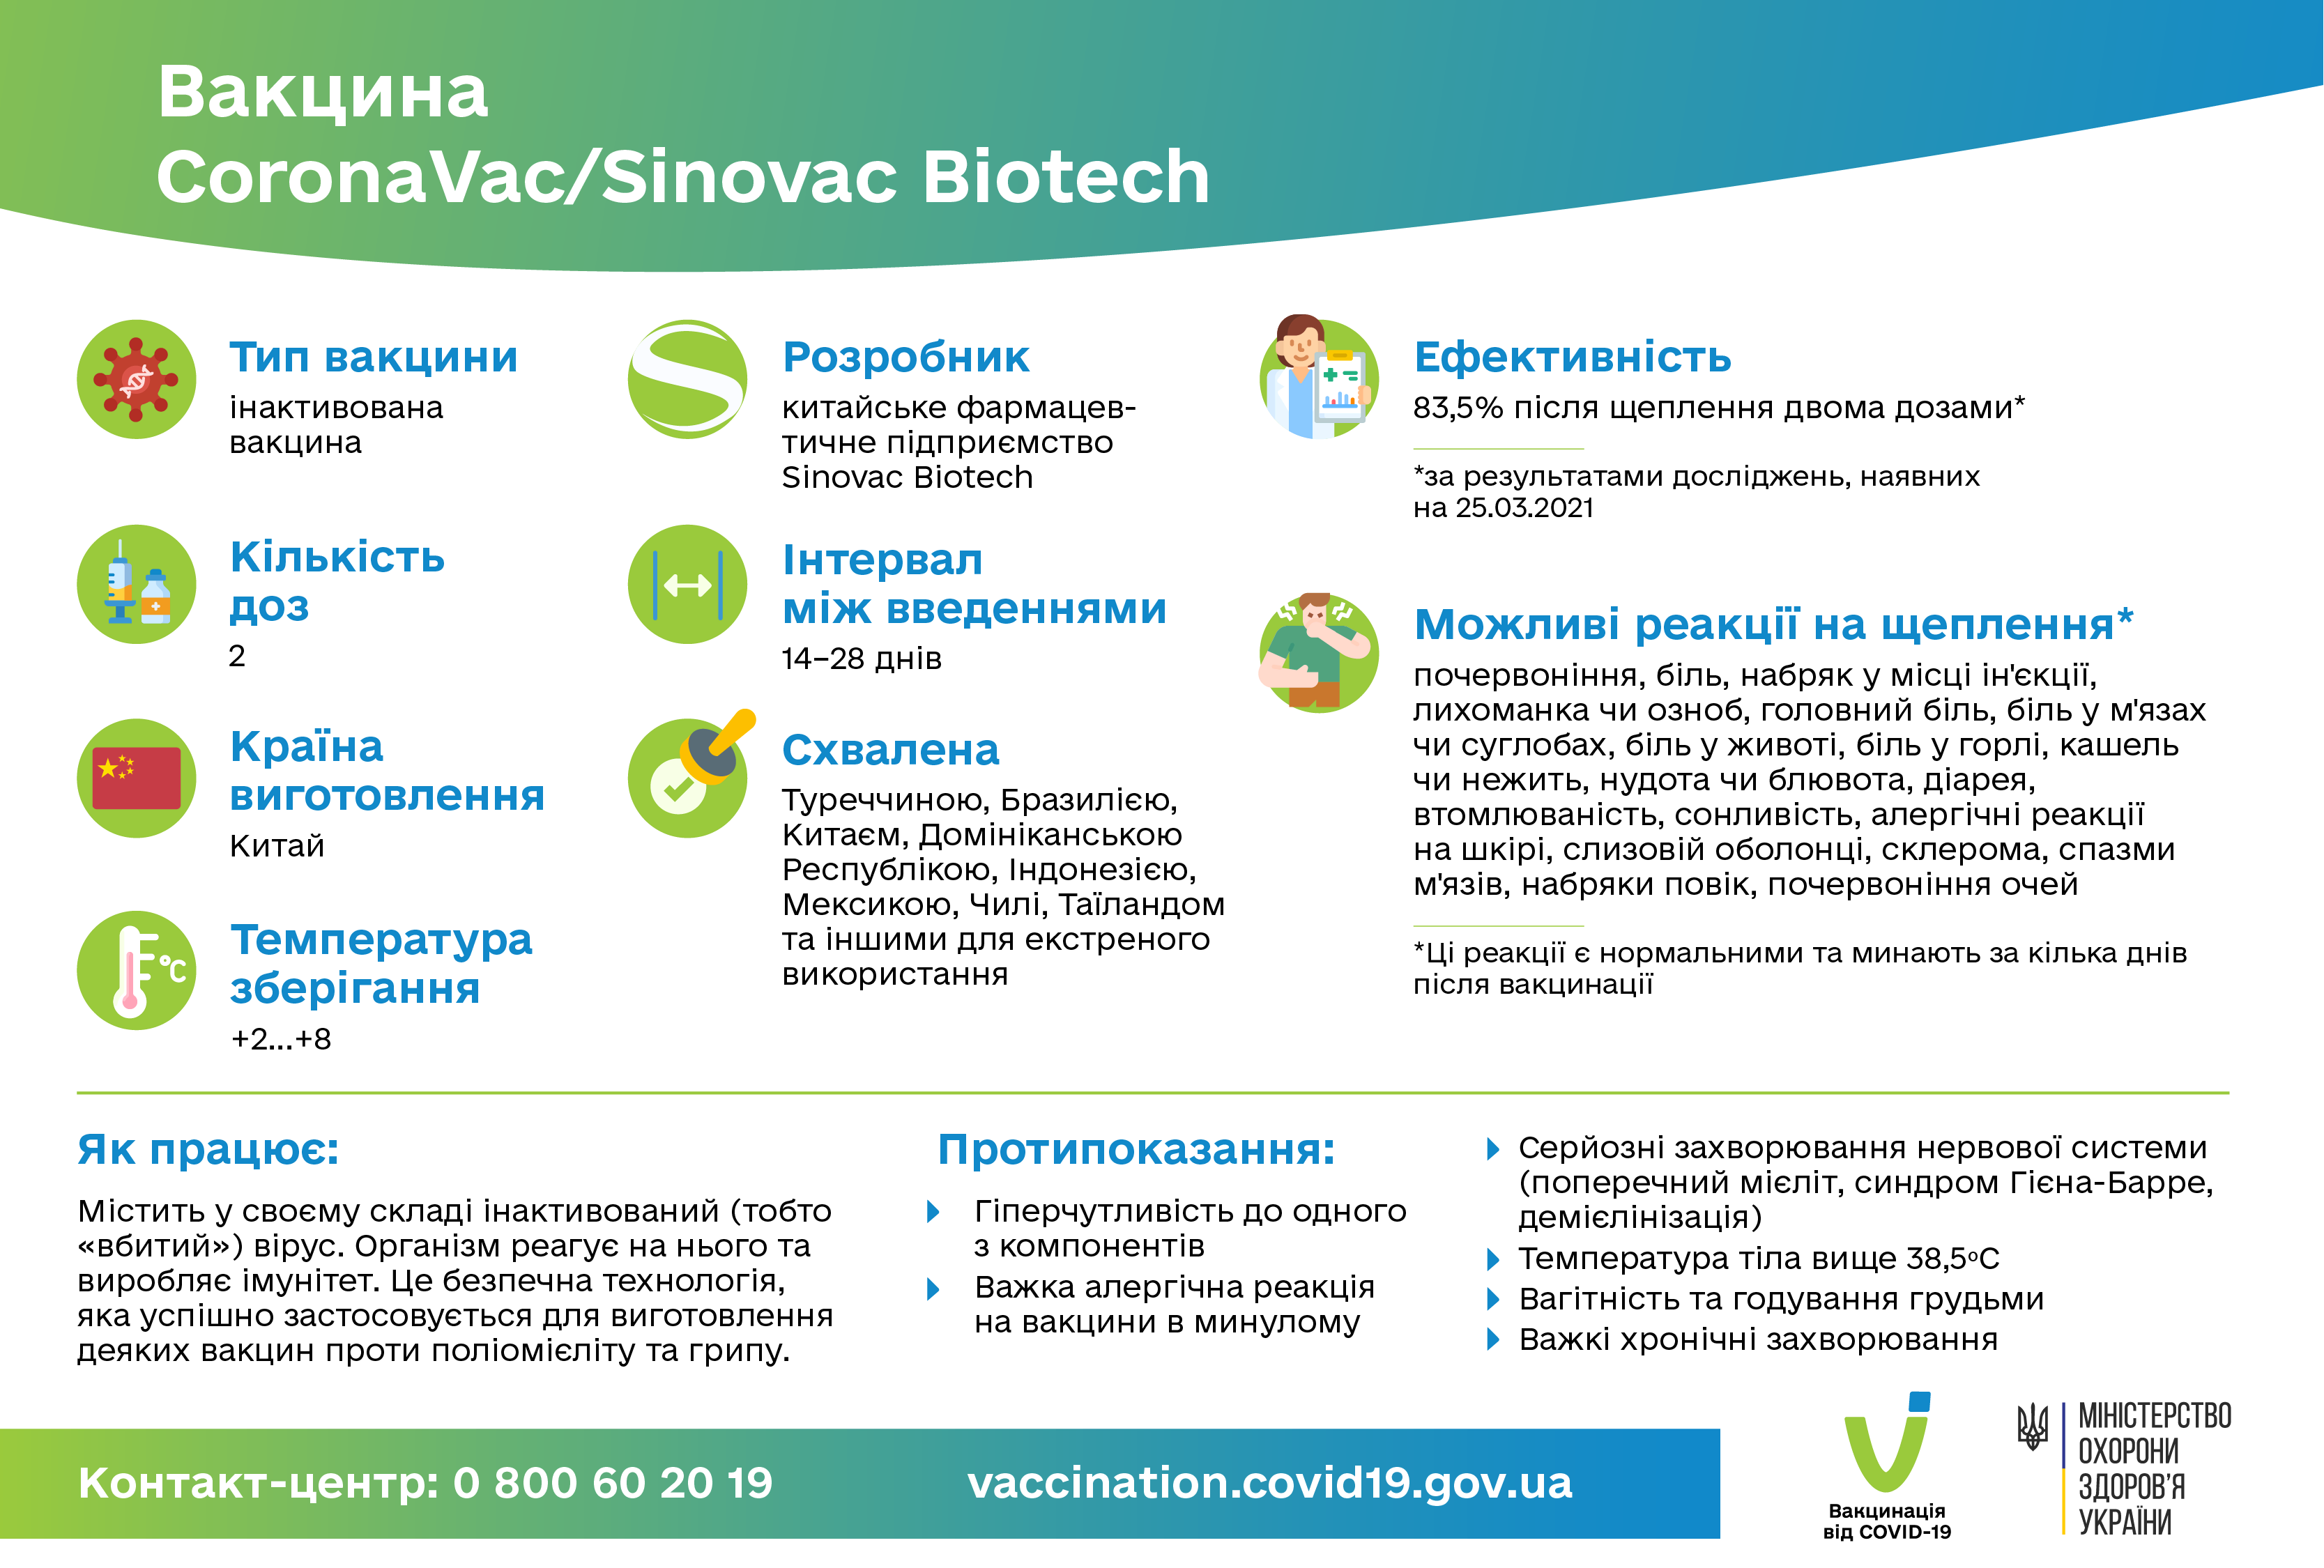 CoronaVac-Sinovac Biotech